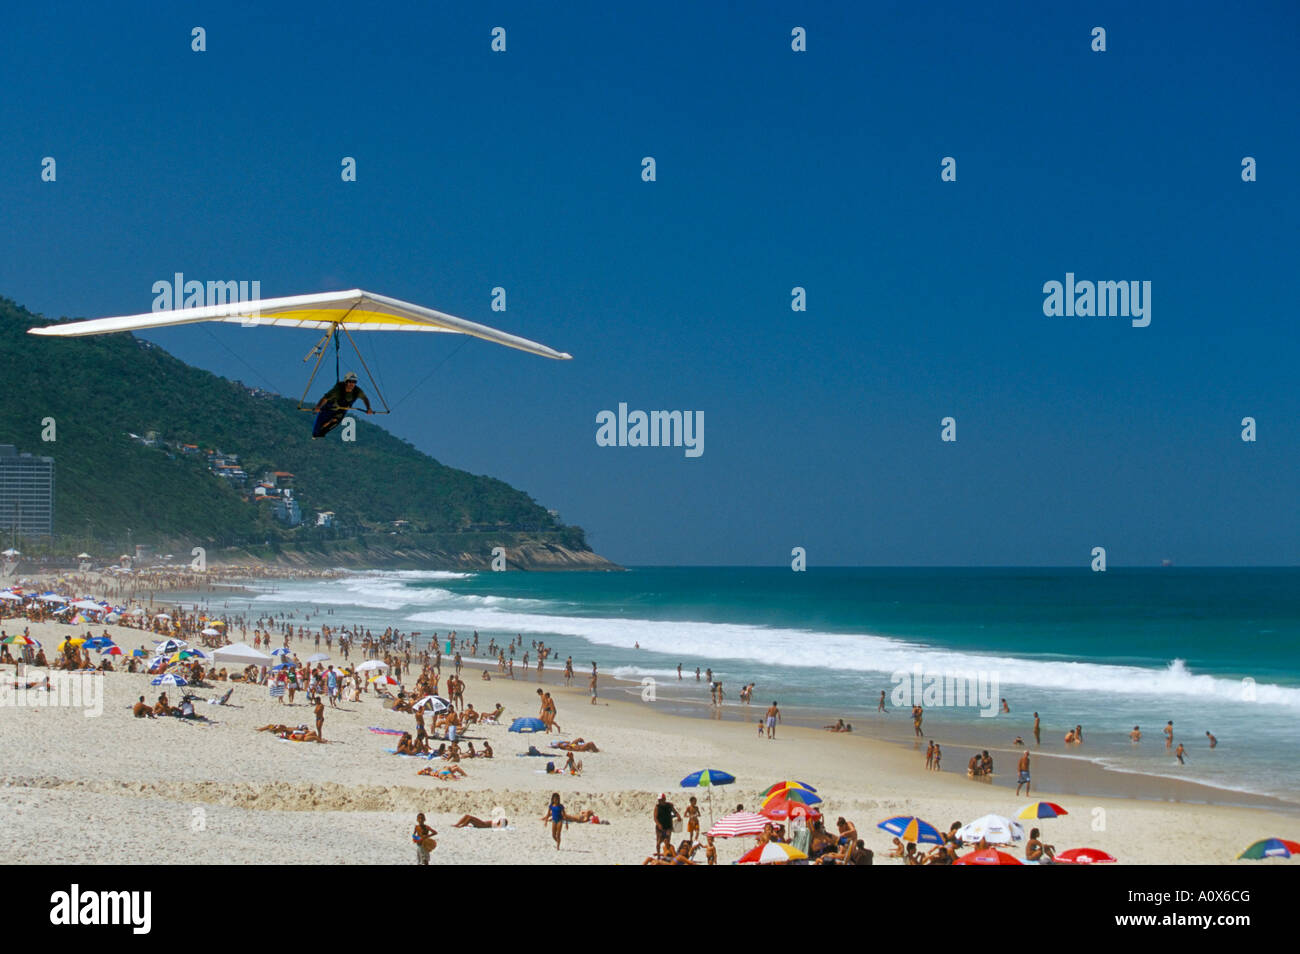 Hängegleiter Landung auf Pepino Strand Rio De Janeiro Brasilien Südamerika Stockfoto